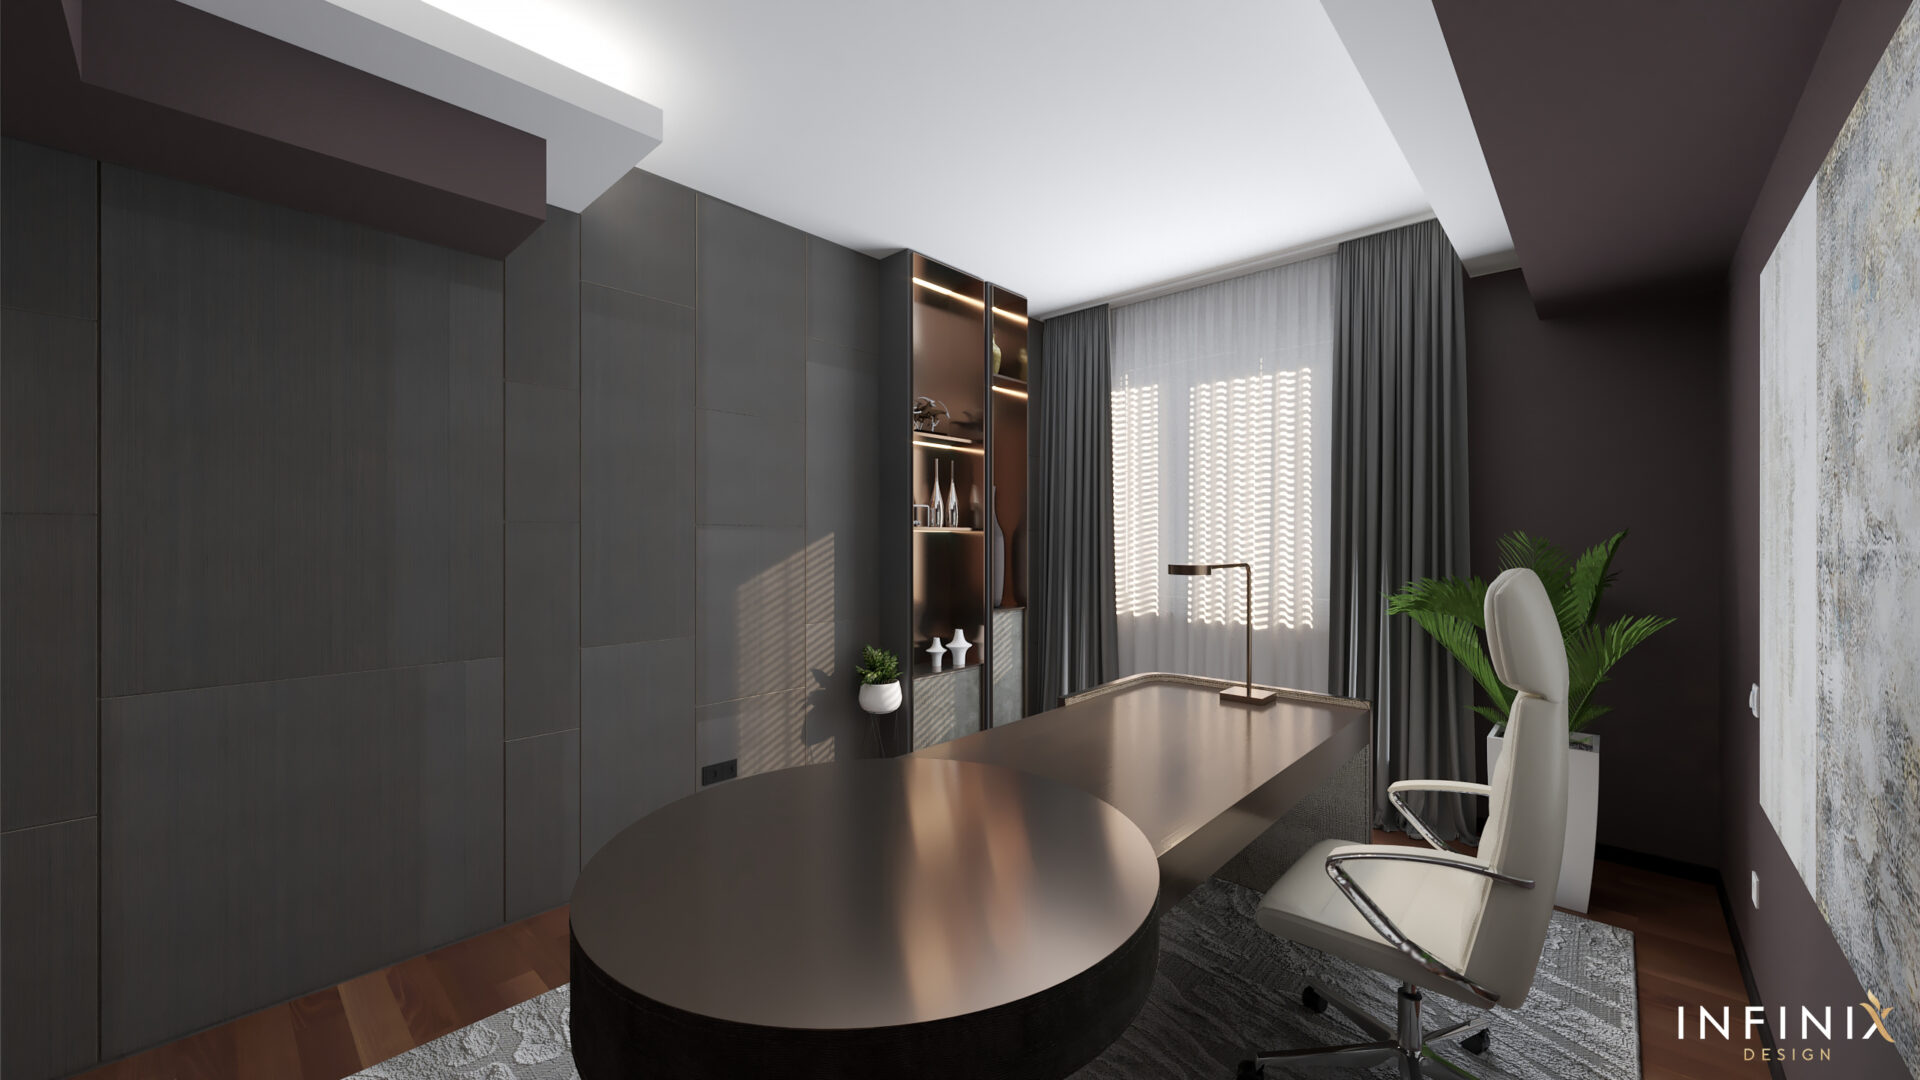 019.17_Infinix_design_interior_apartment conversion office - office 2